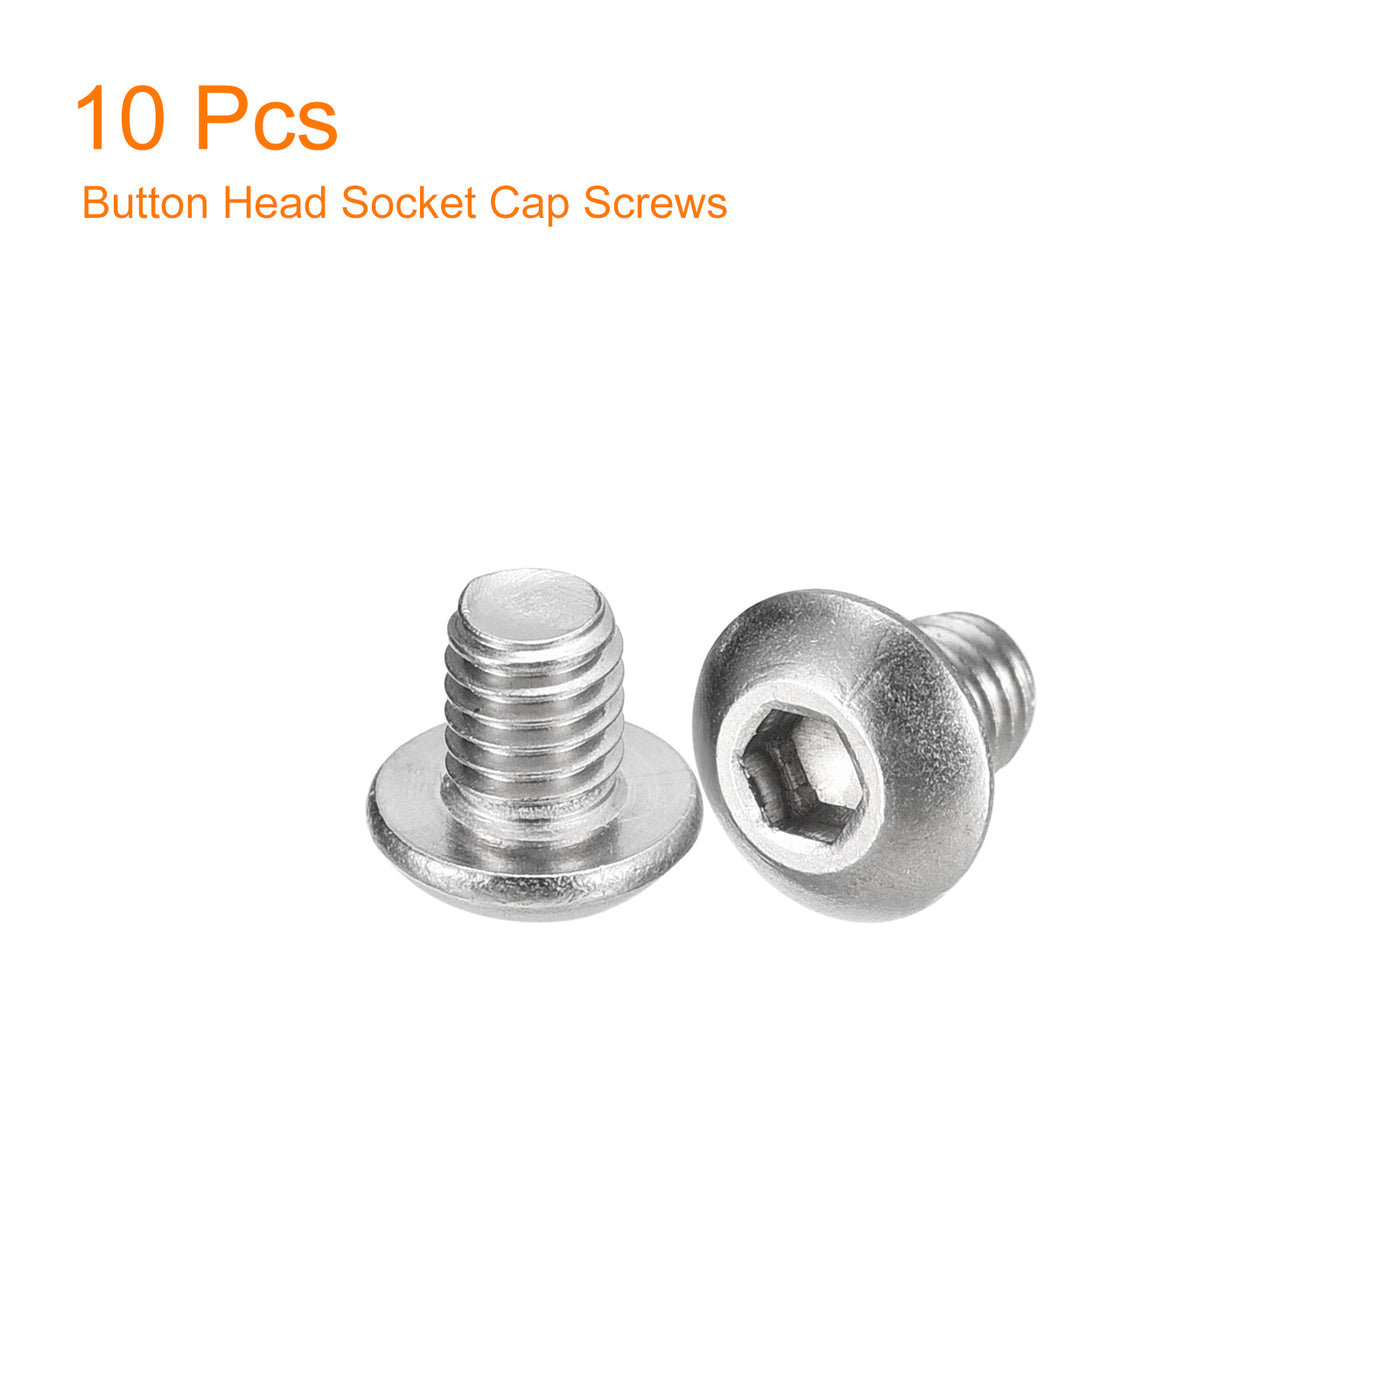 uxcell Uxcell #10-32x1/4" Button Head Socket Cap Screws, 10pcs 304 Stainless Steel Screws